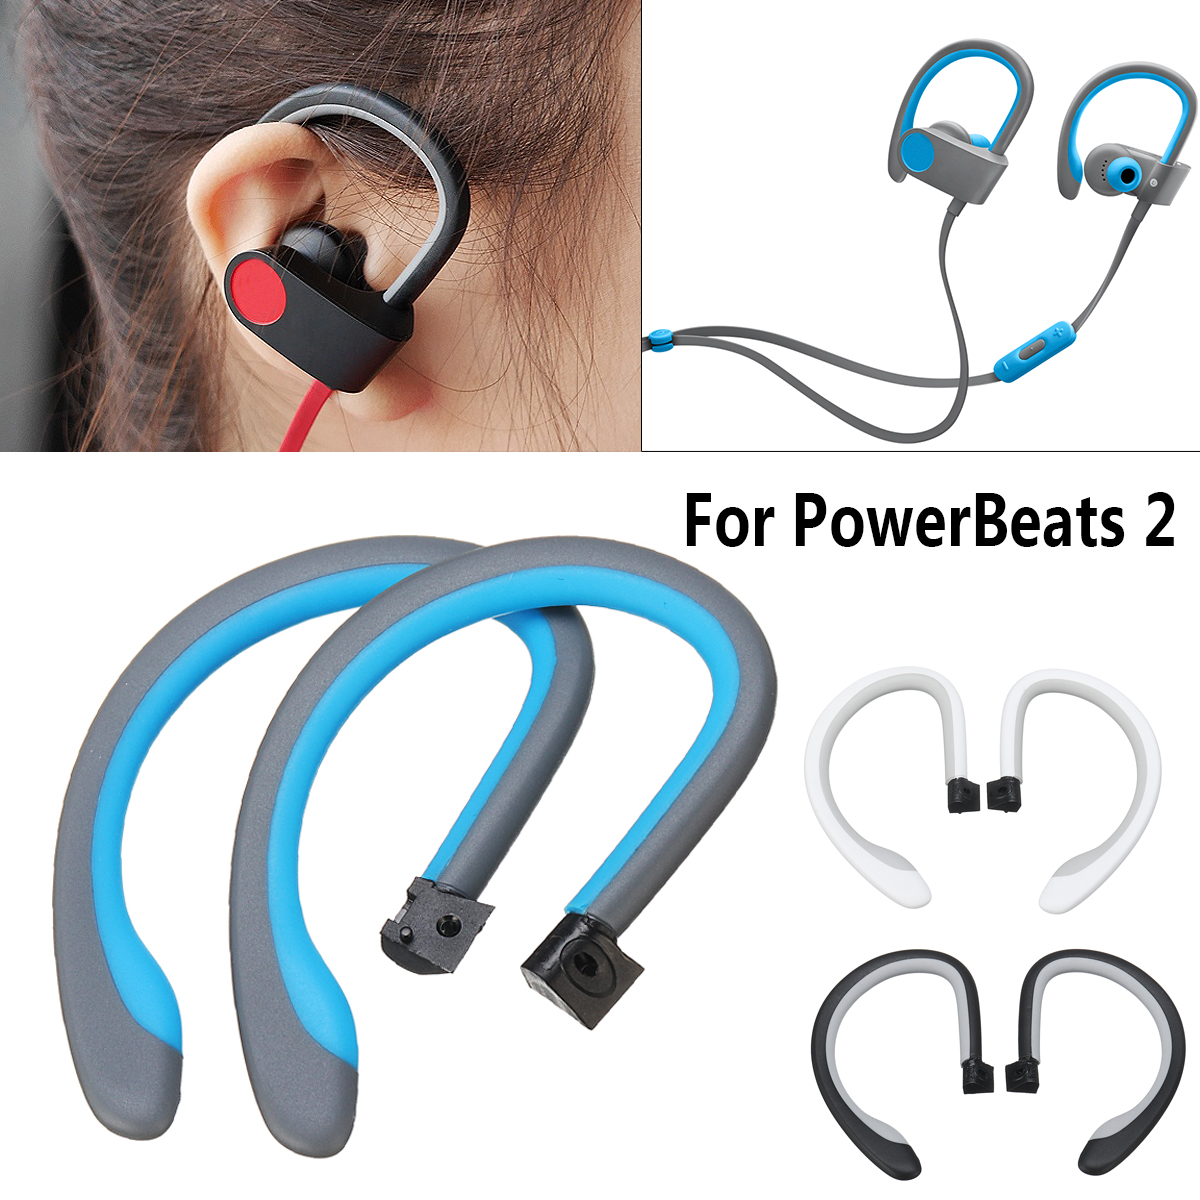 how to fix ear hook on powerbeats